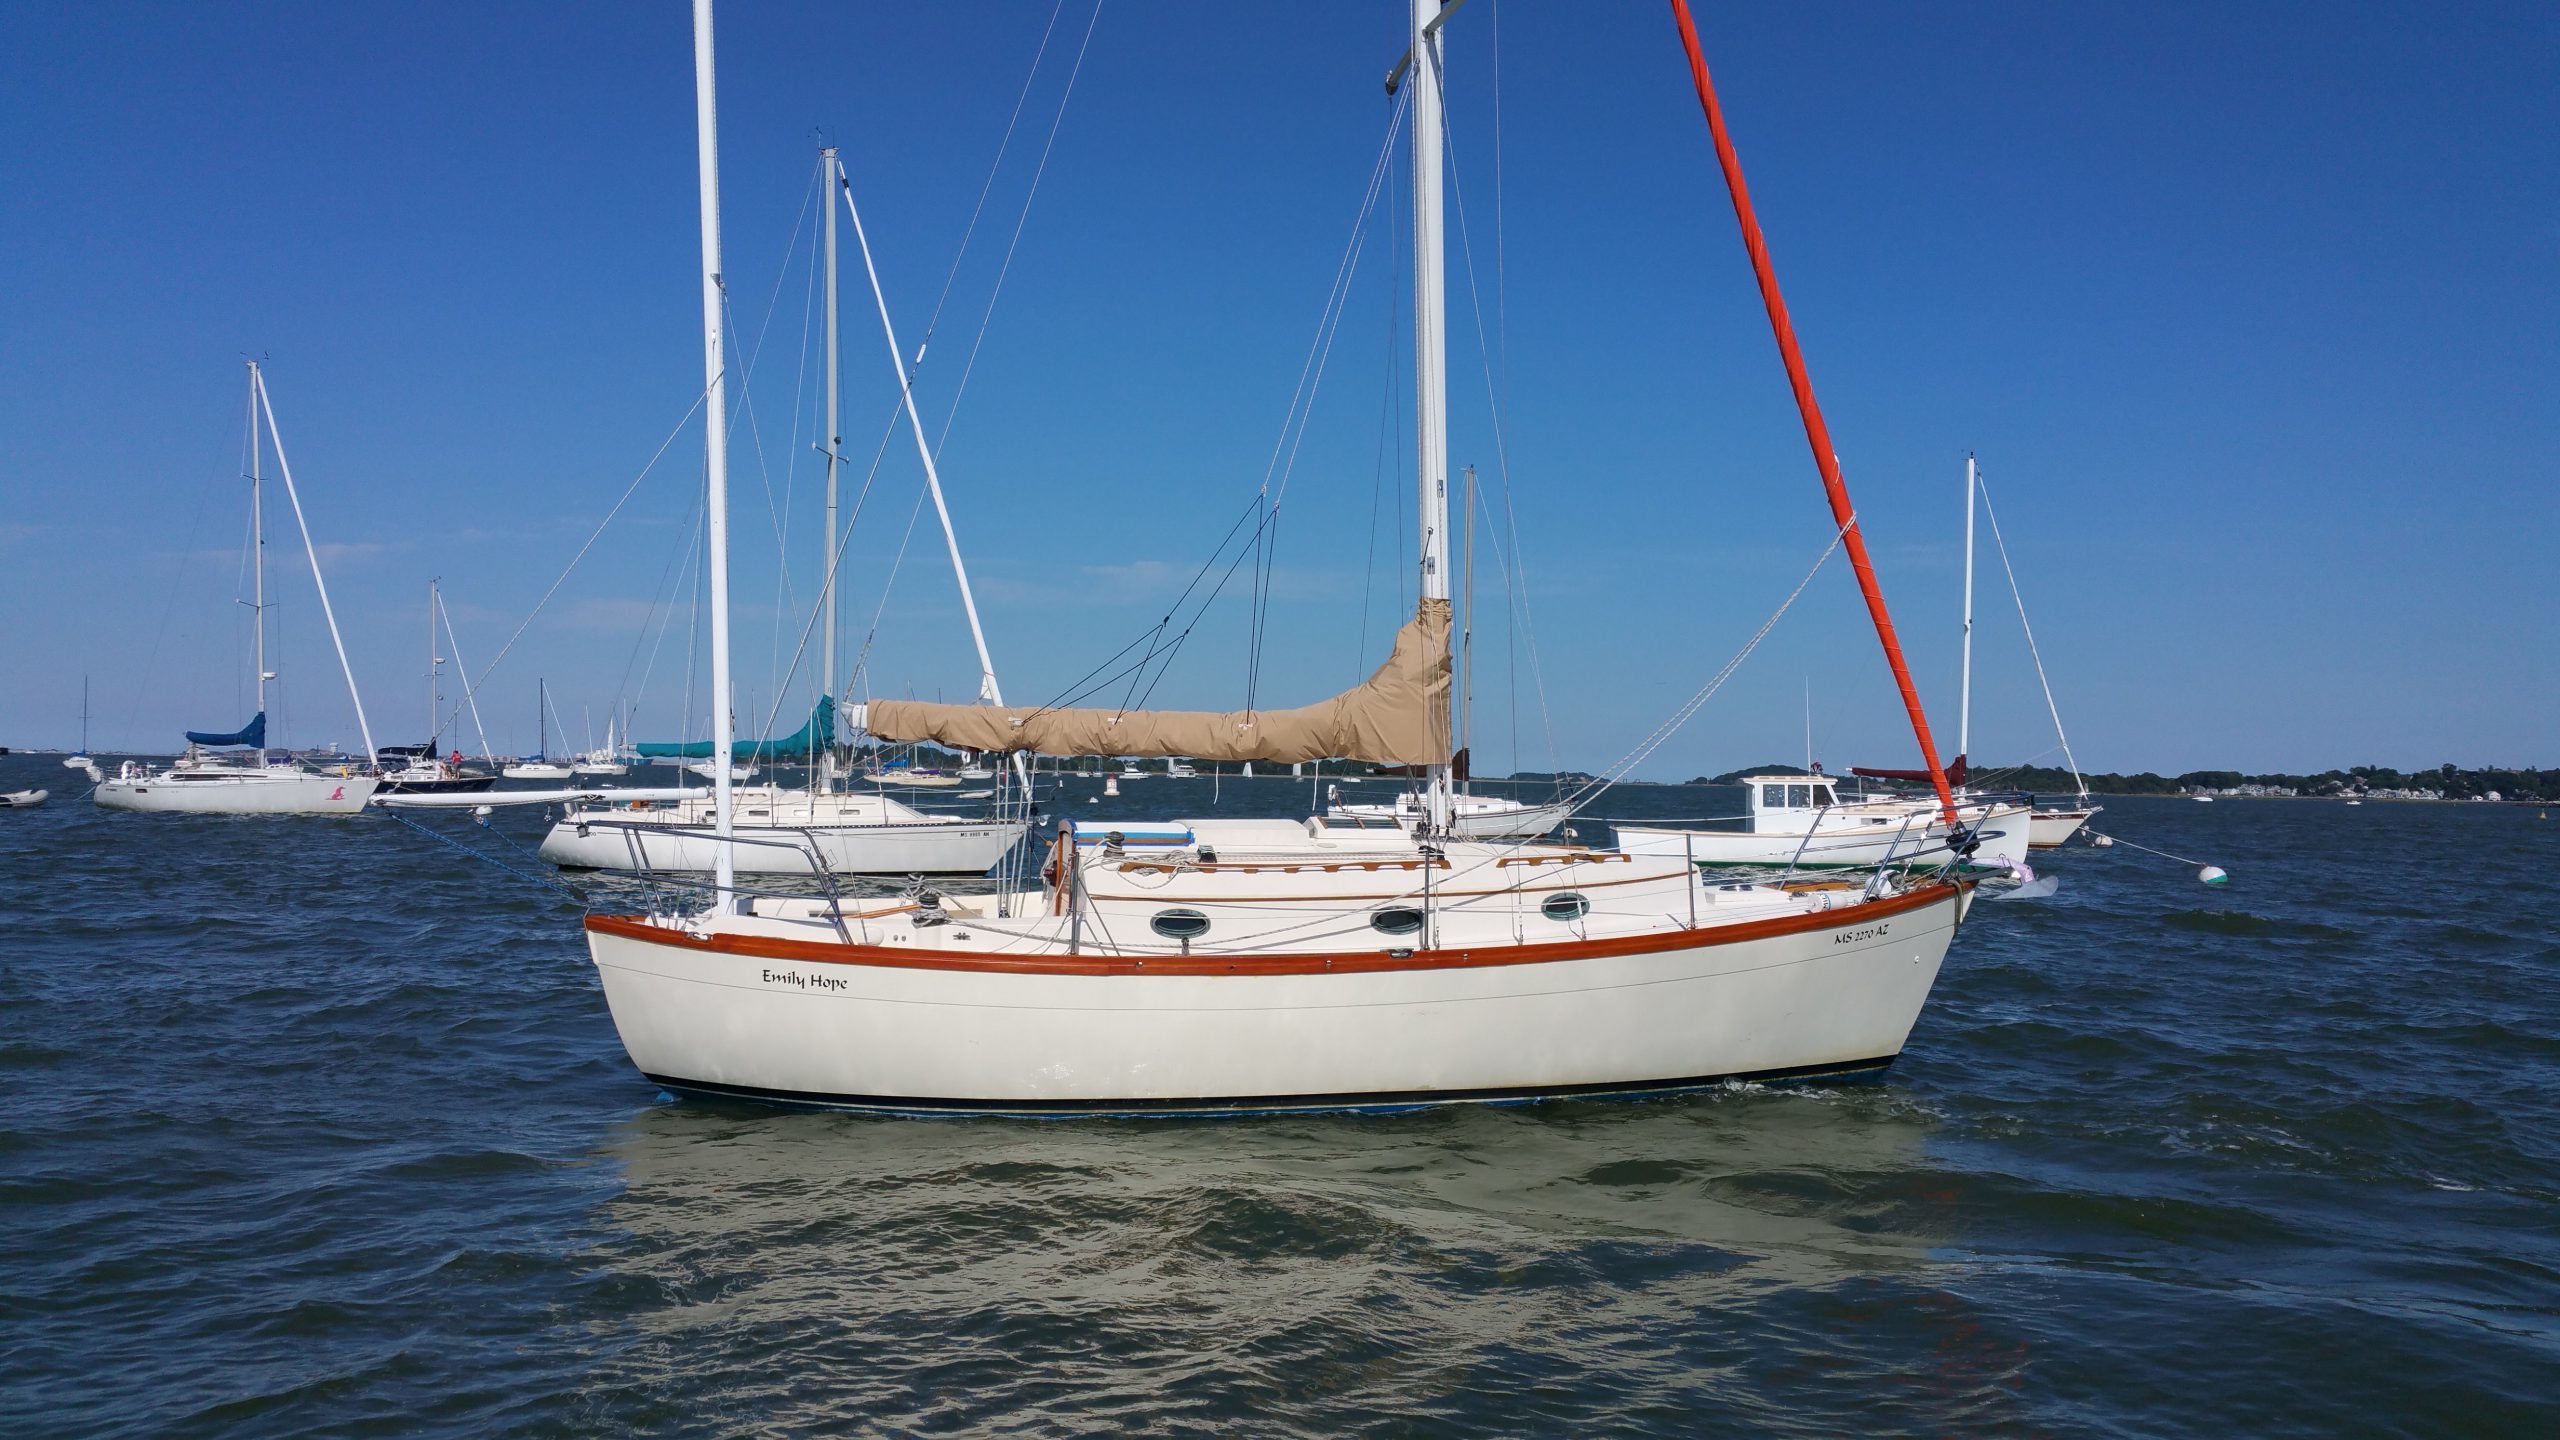 nimble 30 sailboat